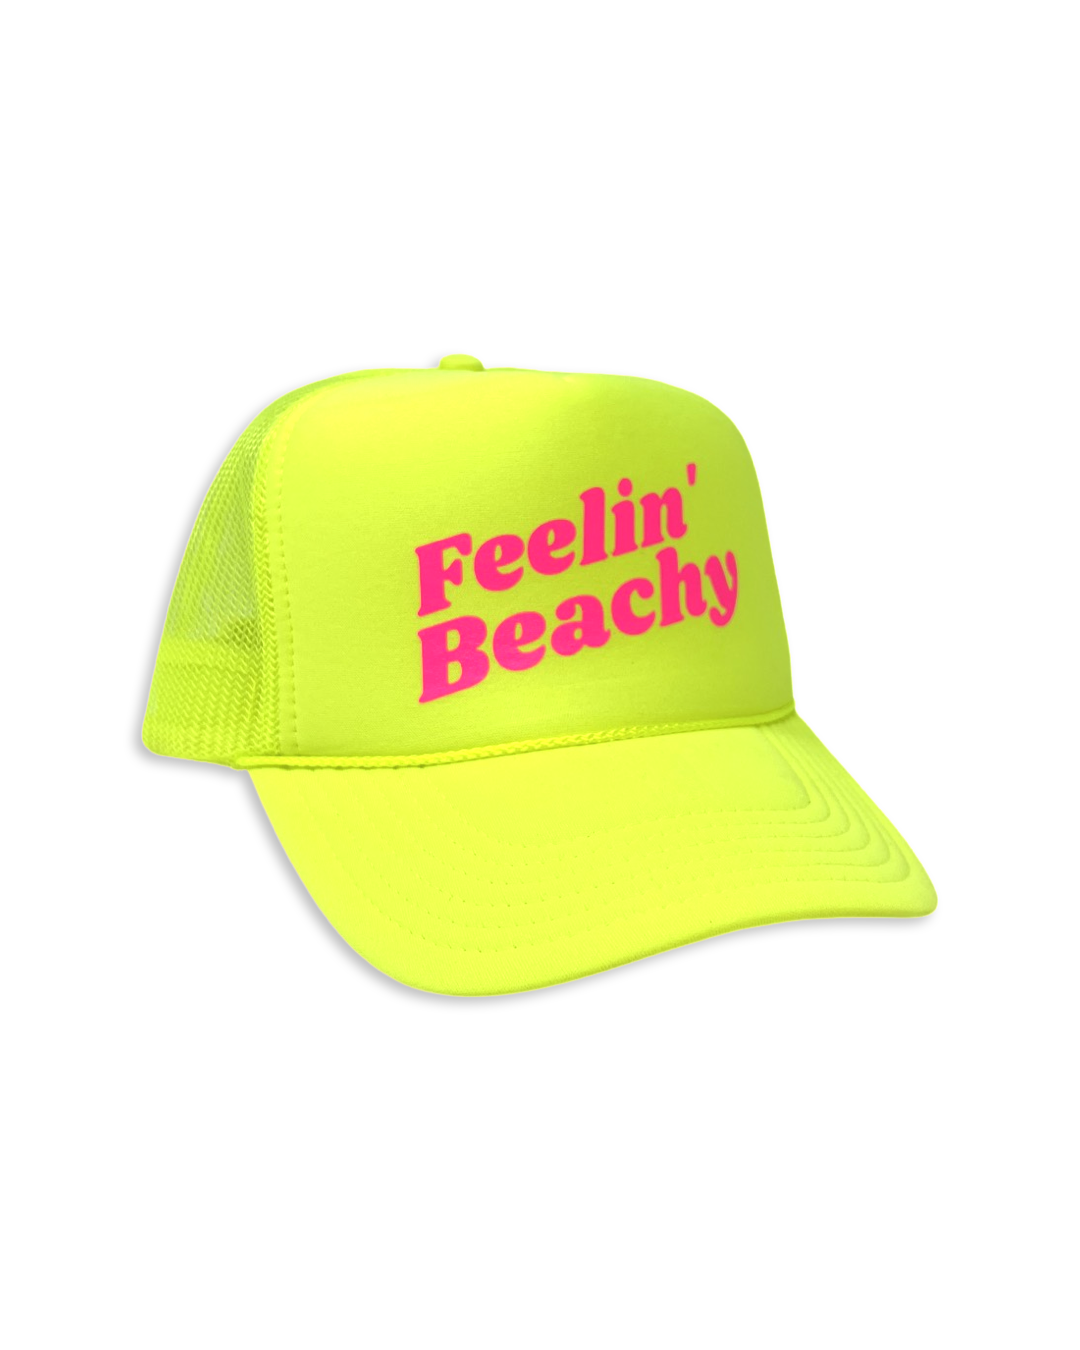 Beachy Hat in Neon Yellow